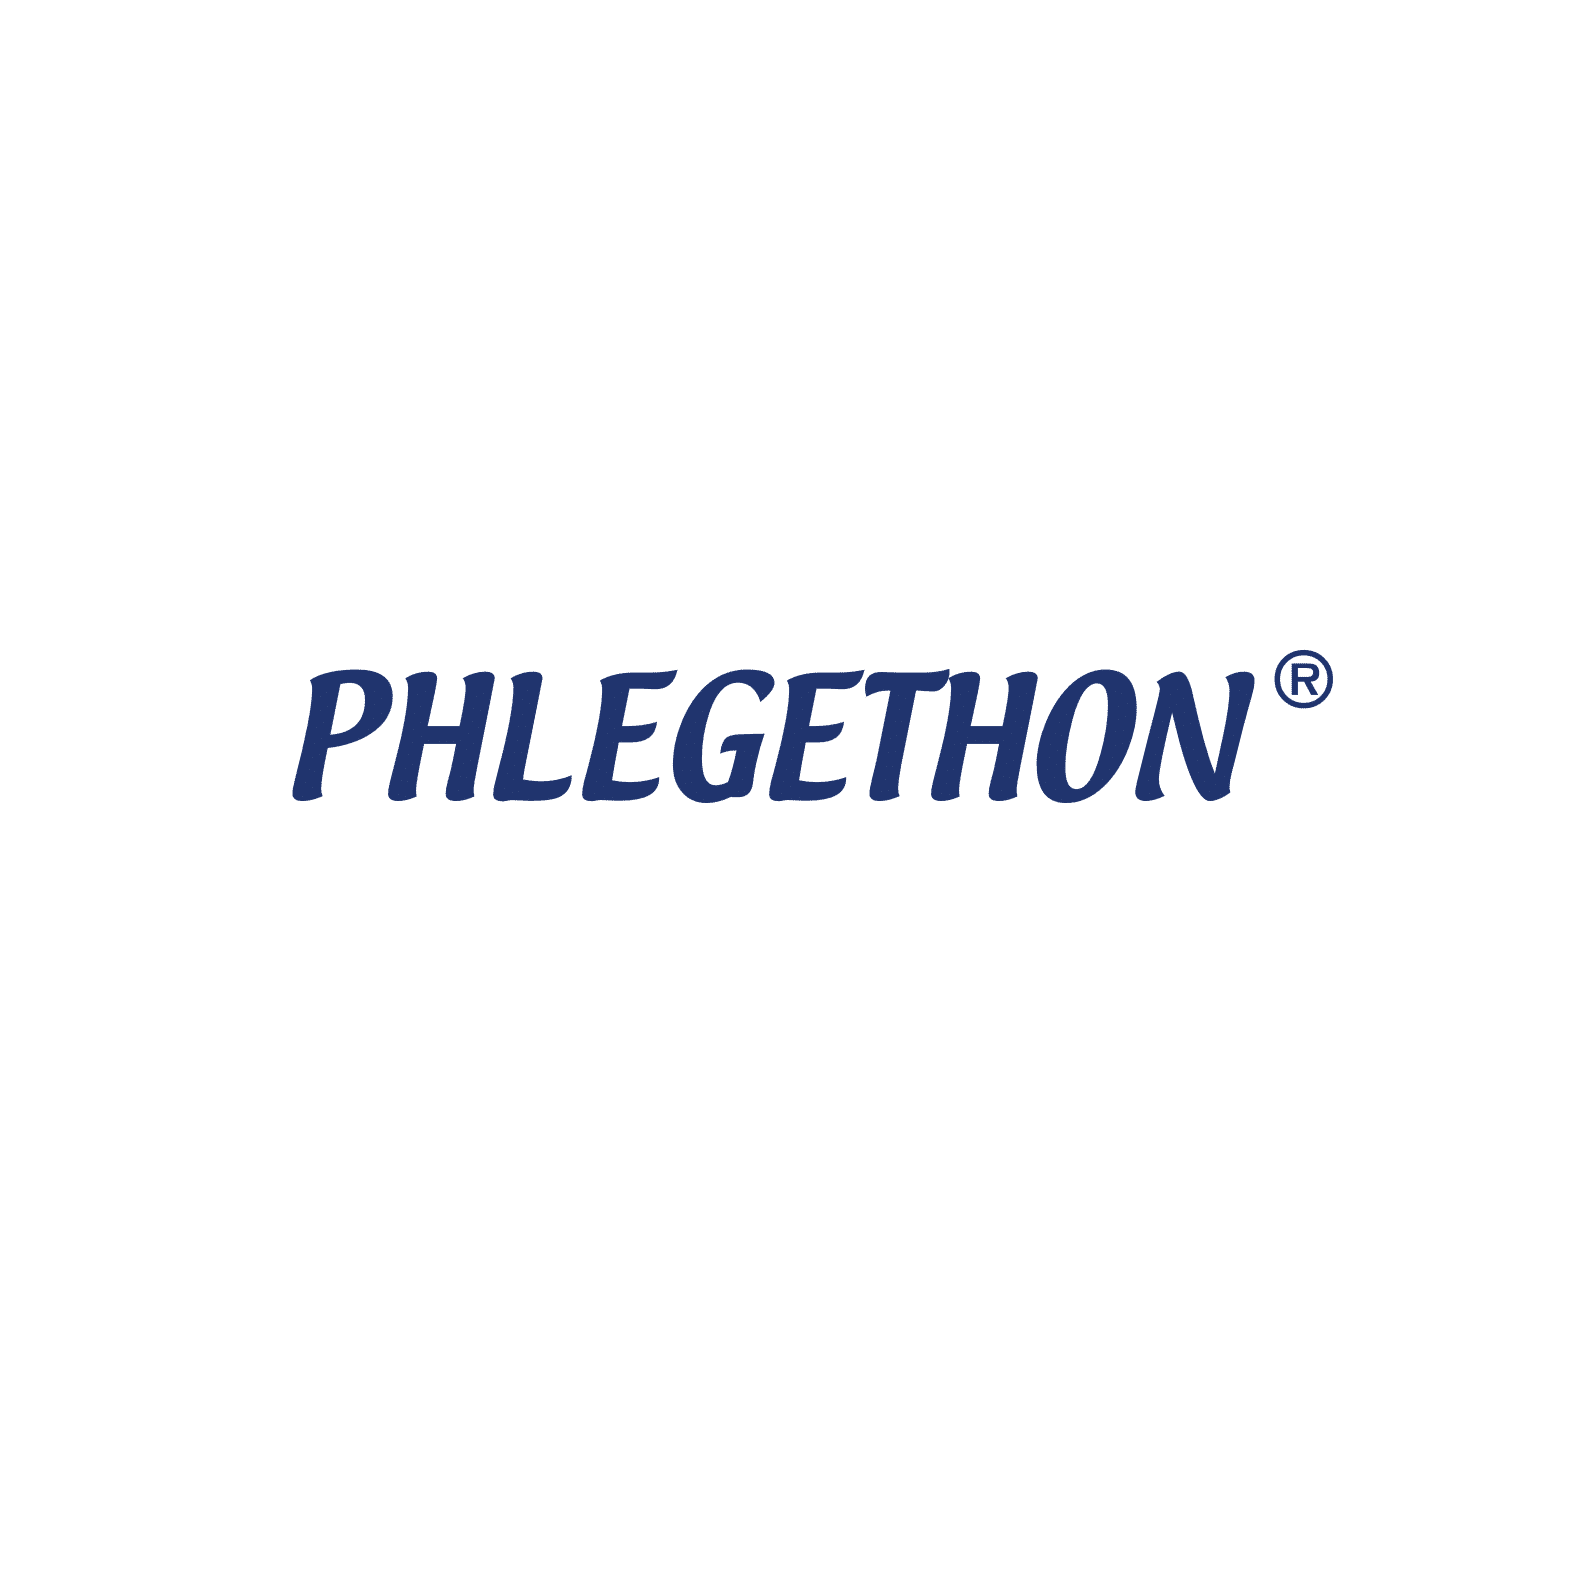 PHLEGETHON® resmi